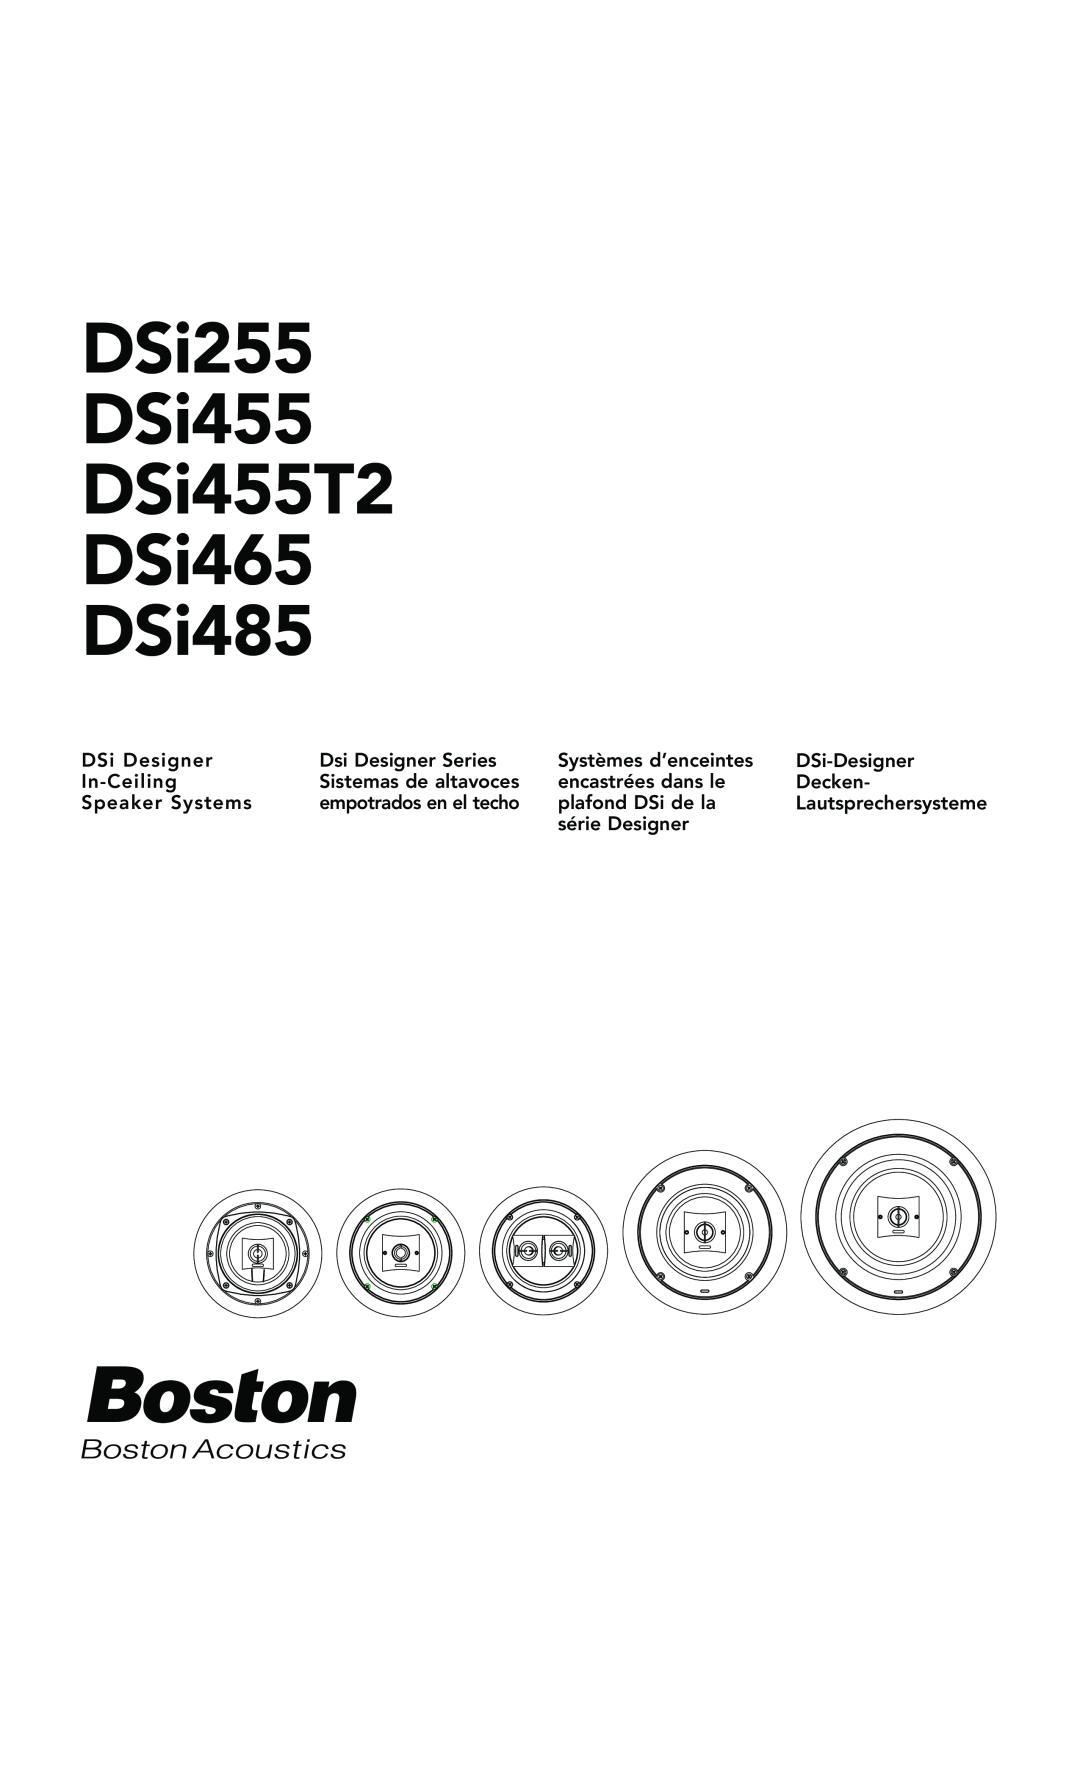 Boston Acoustics DSI285 specifications DSi255 DSi265 DSi285, Specifications, DSi Designer In-Wall/In-CeilingSpeakers 